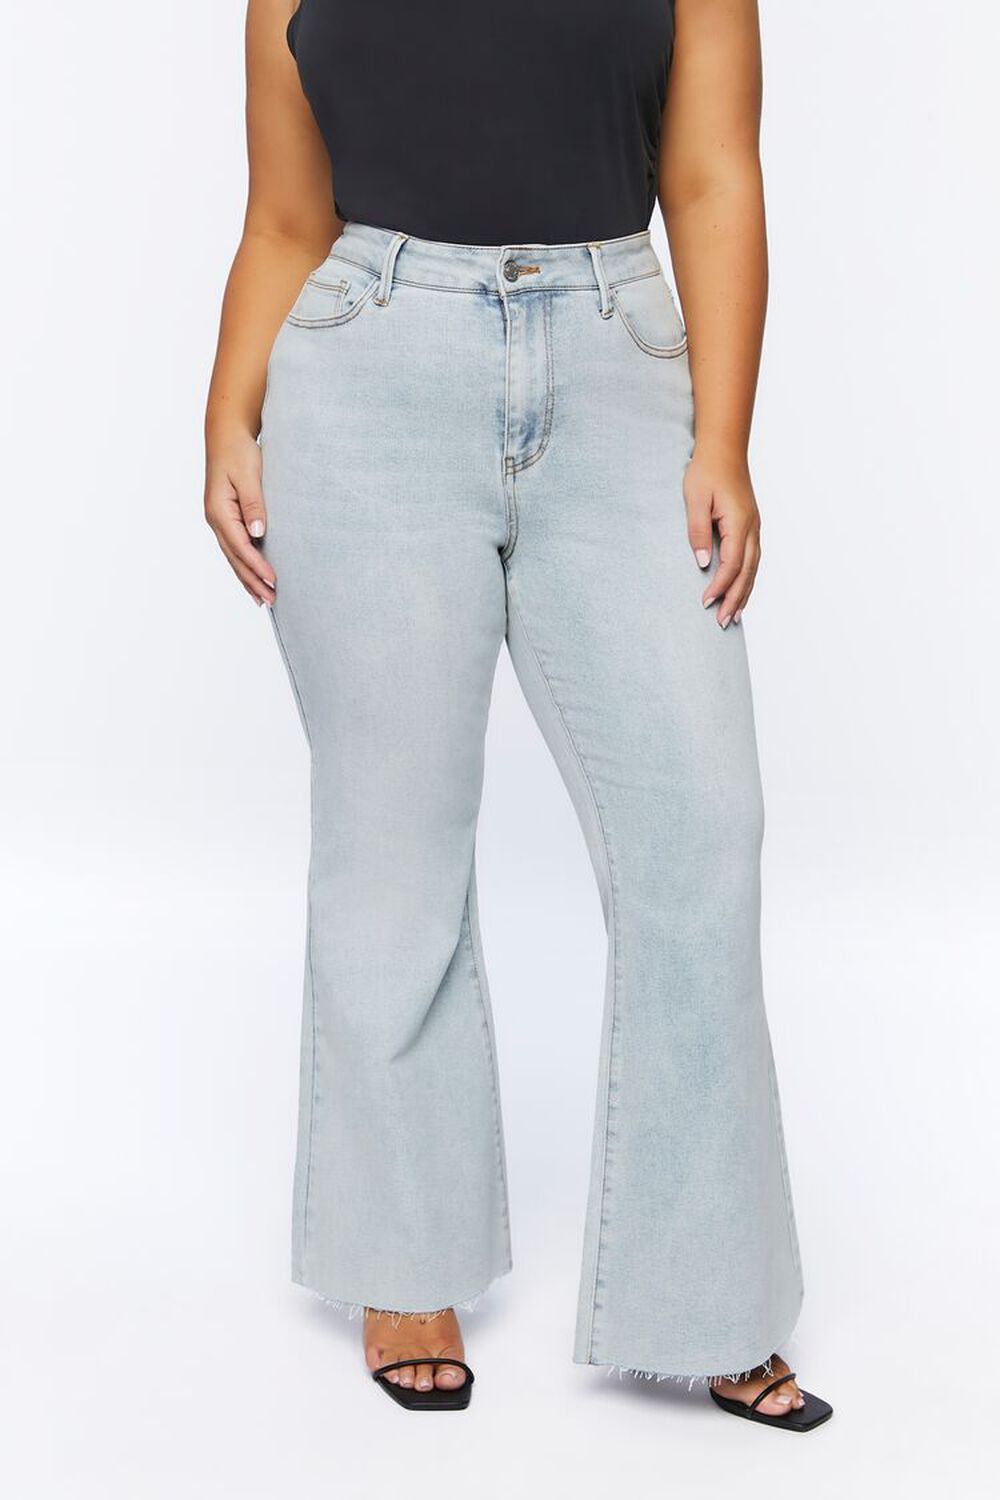 LIGHT DENIM Plus Size Raw-Cut Flare Jeans, image 2